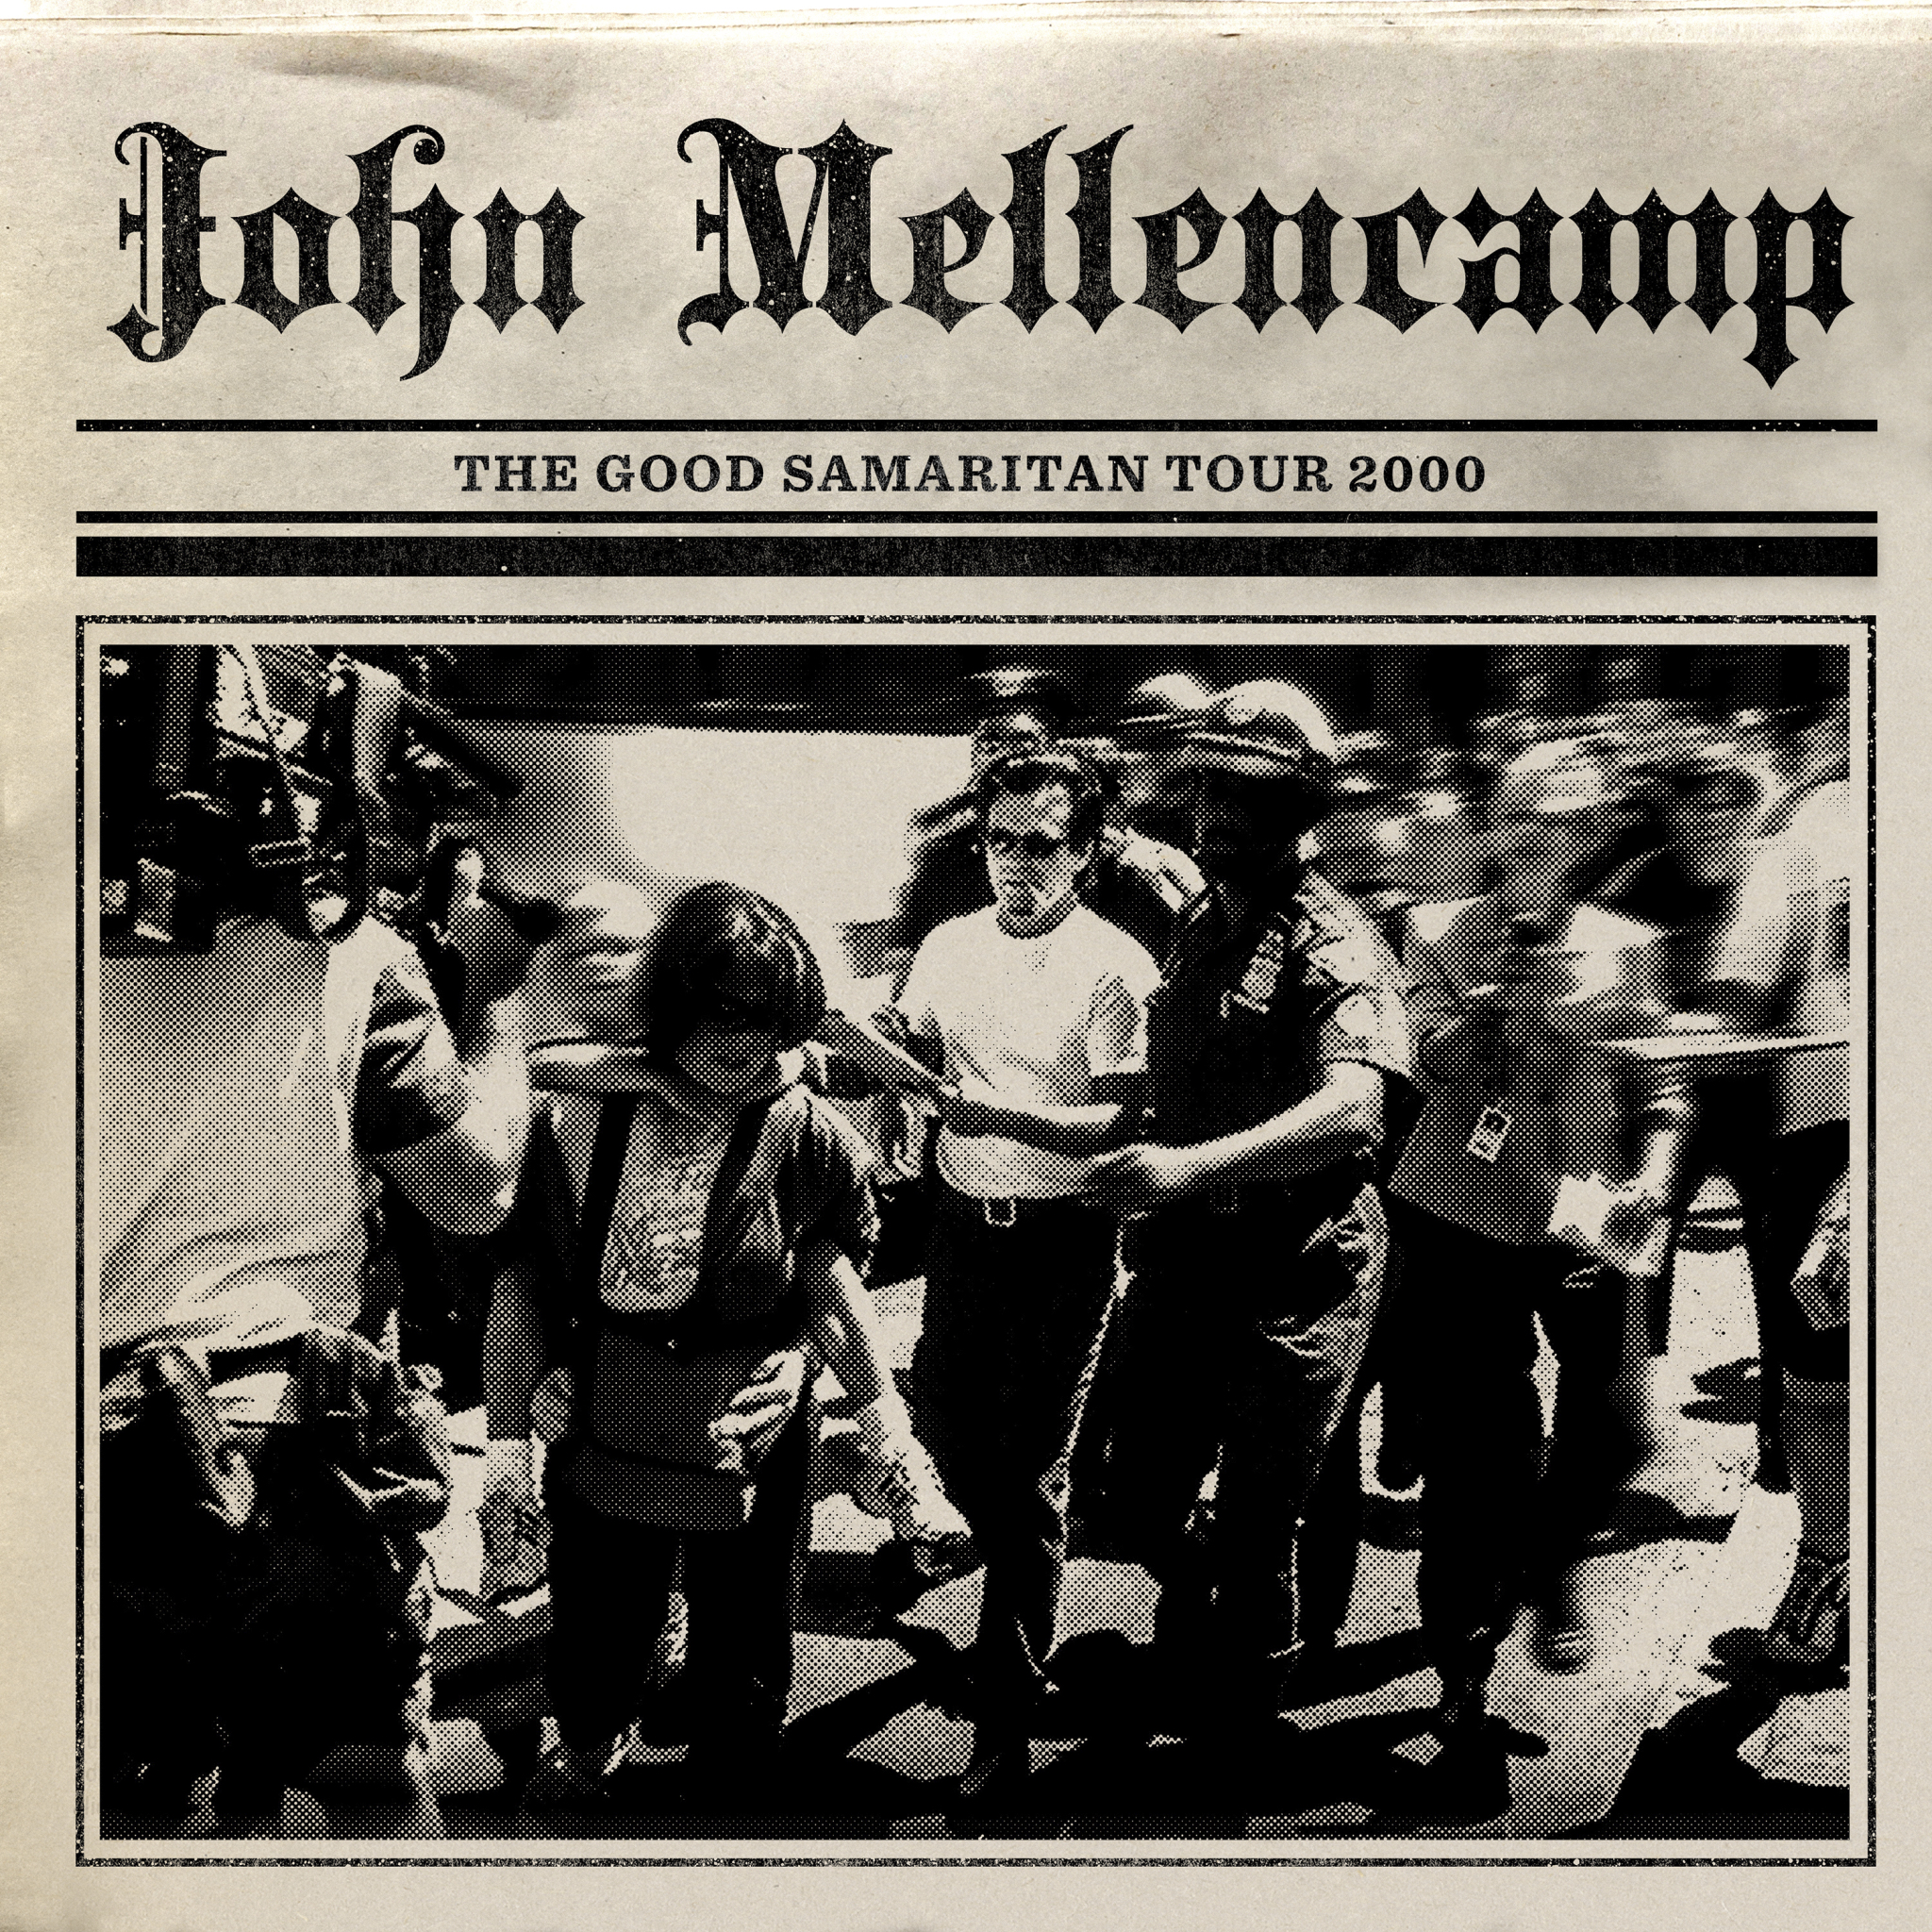 JOHN MELLENCAMP RELEASE THE GOOD SAMARITAN TOUR 2000 LIVE ALBUM 